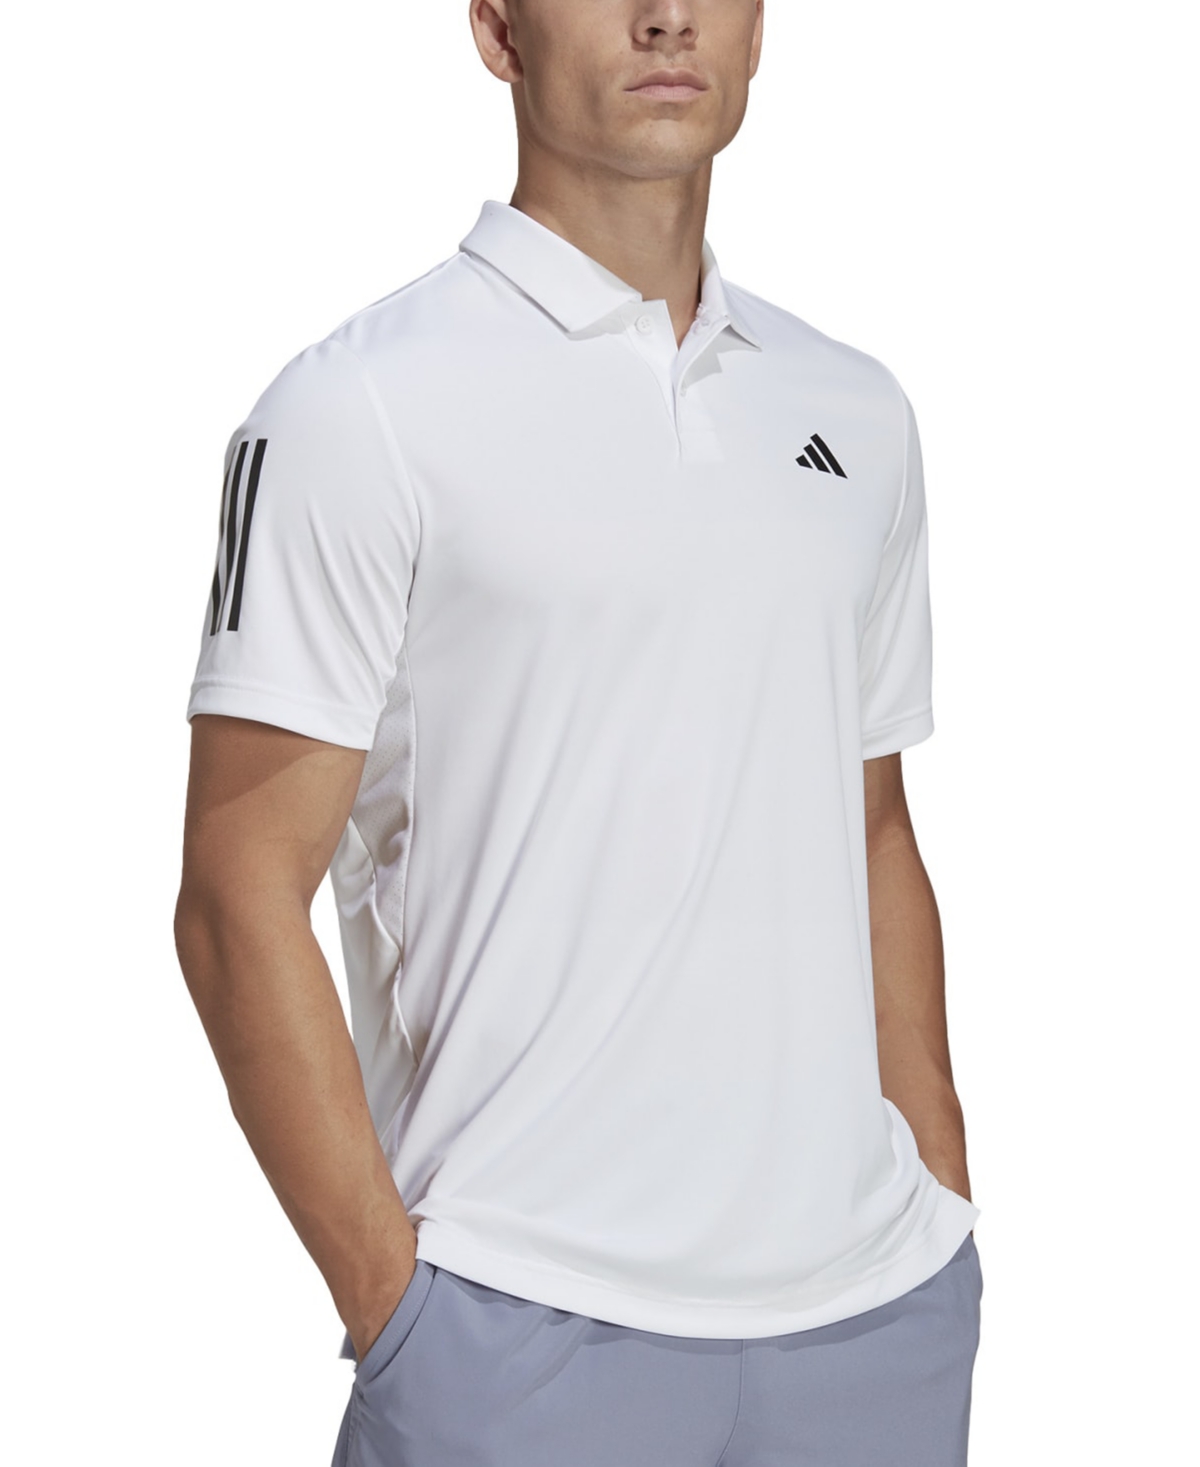 Men's 3-Stripes Short Sleeve Performance Club Tennis Polo Shirt - White